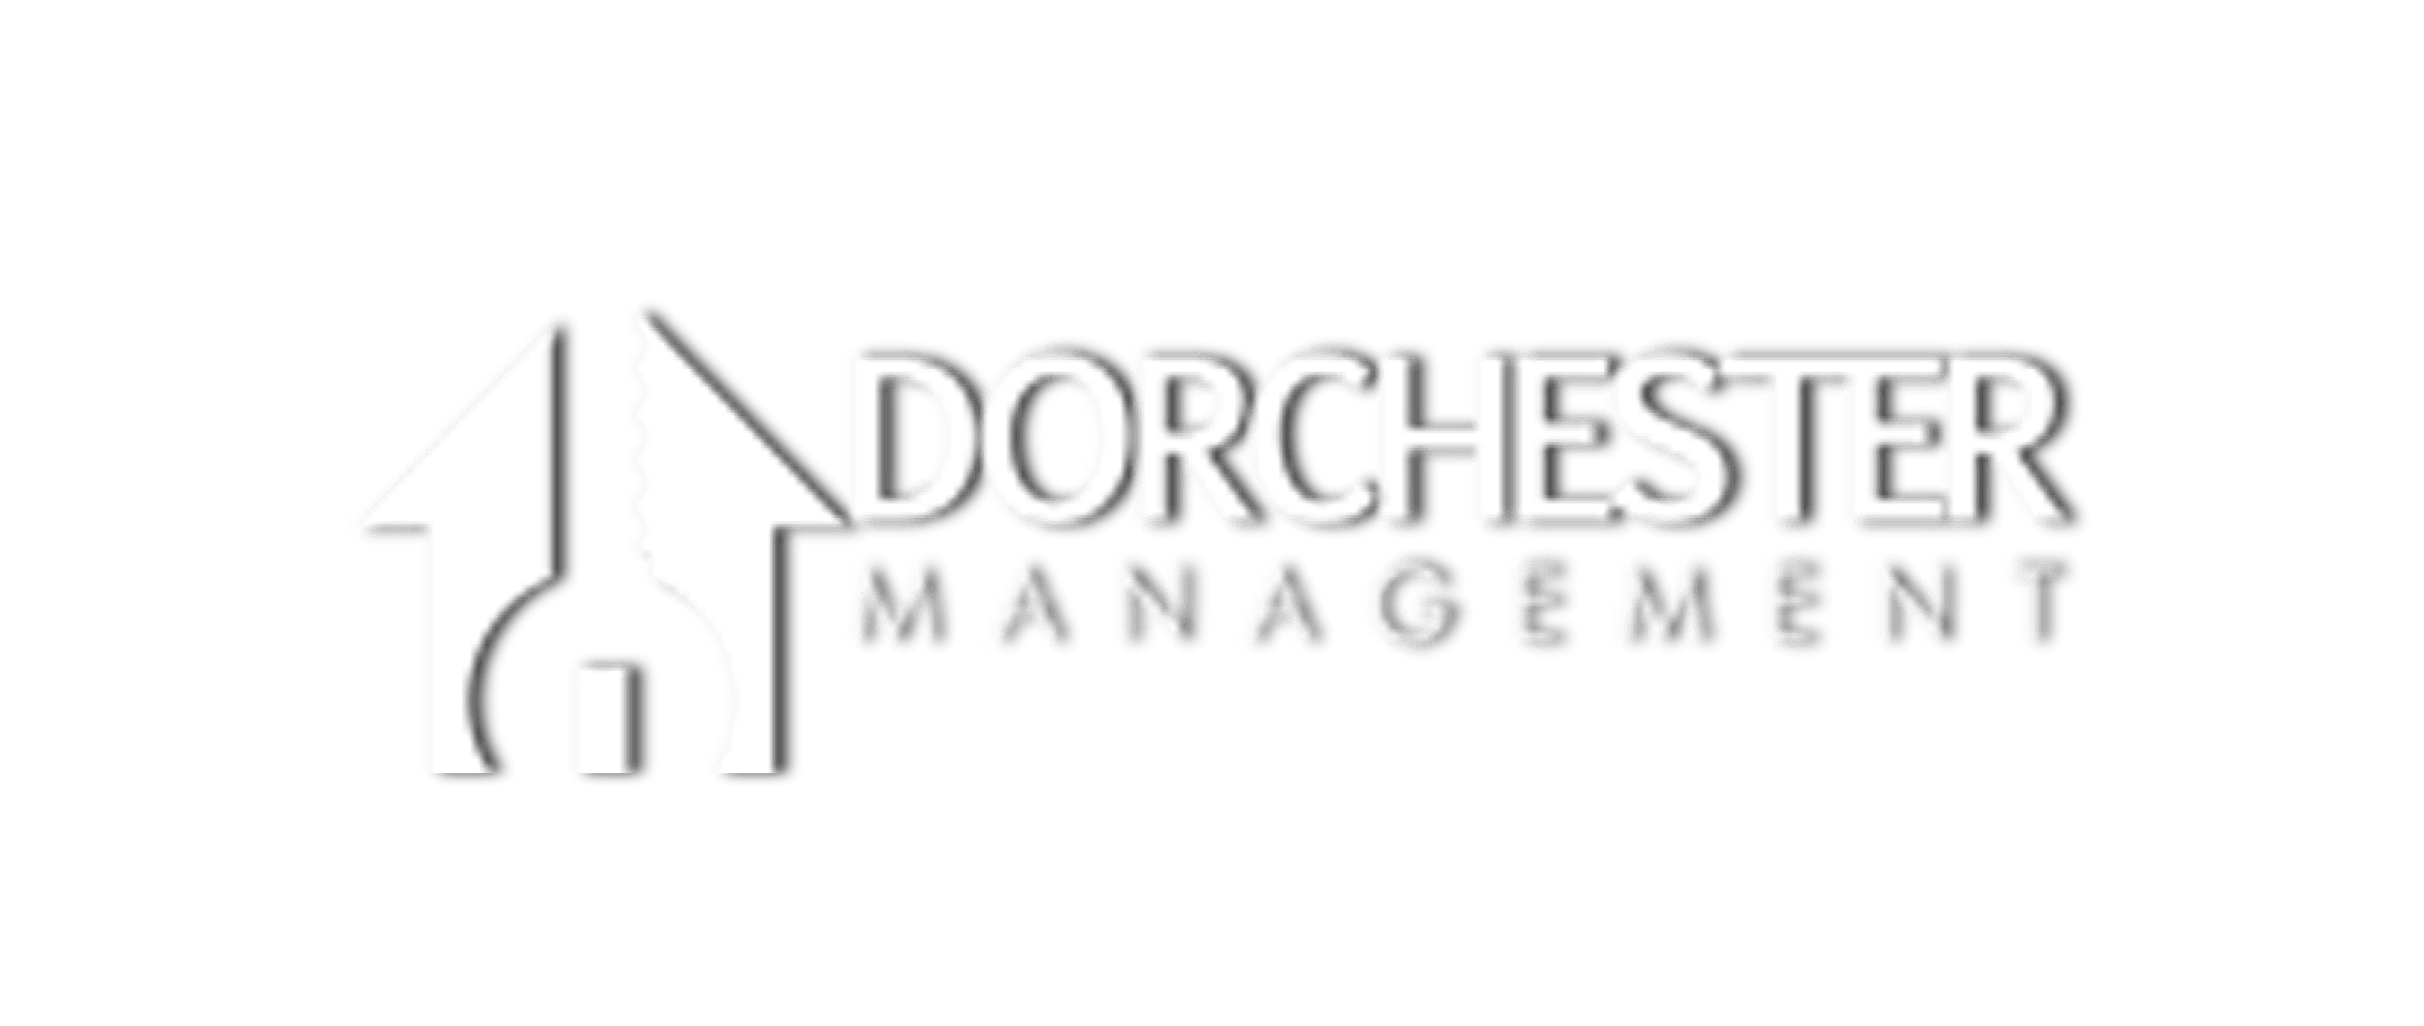 Dorchester Logo - Dorchester Management | Property Management